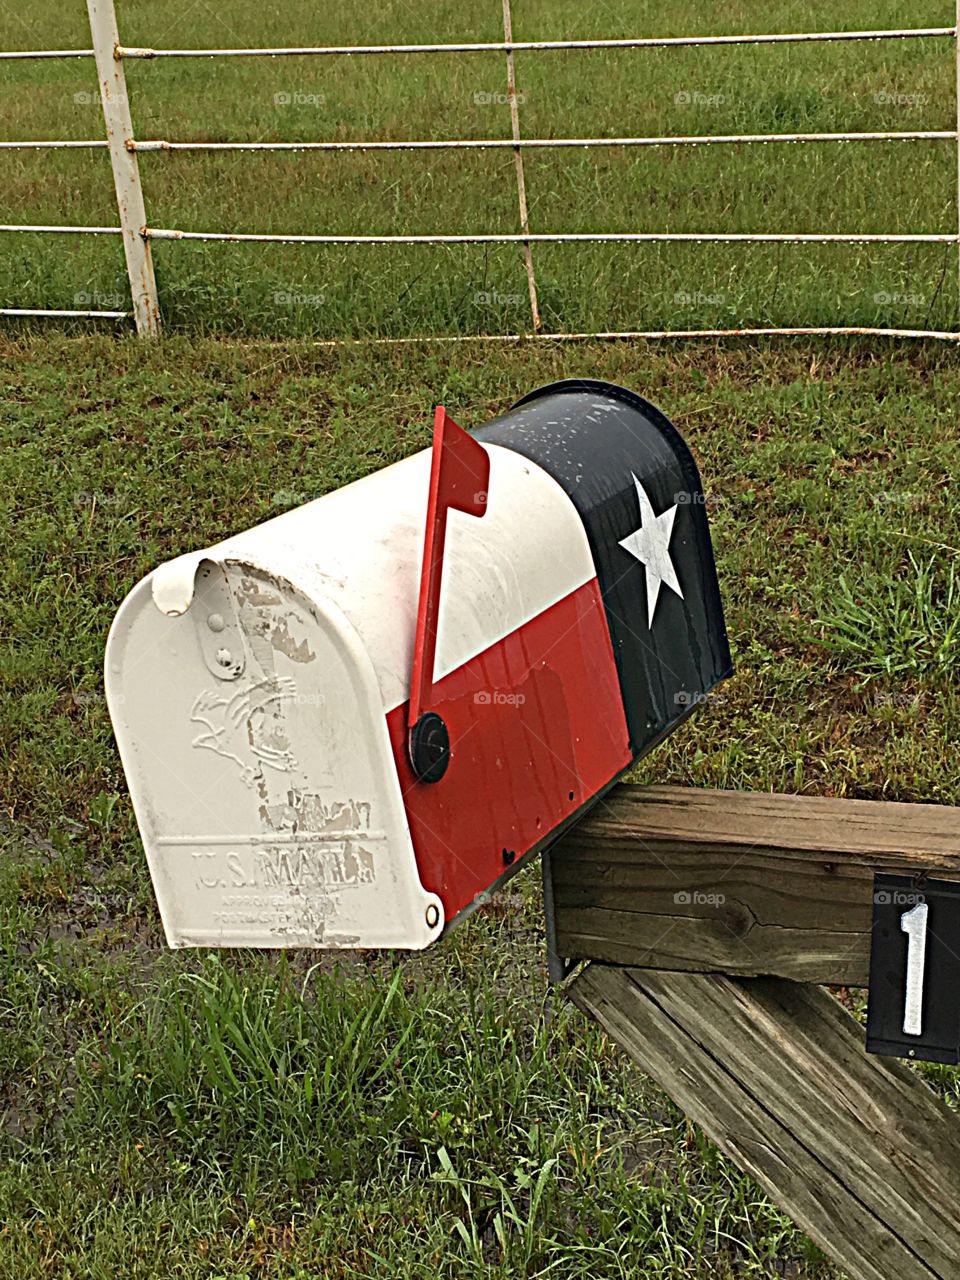 Mailbox painted like a Texas flag b